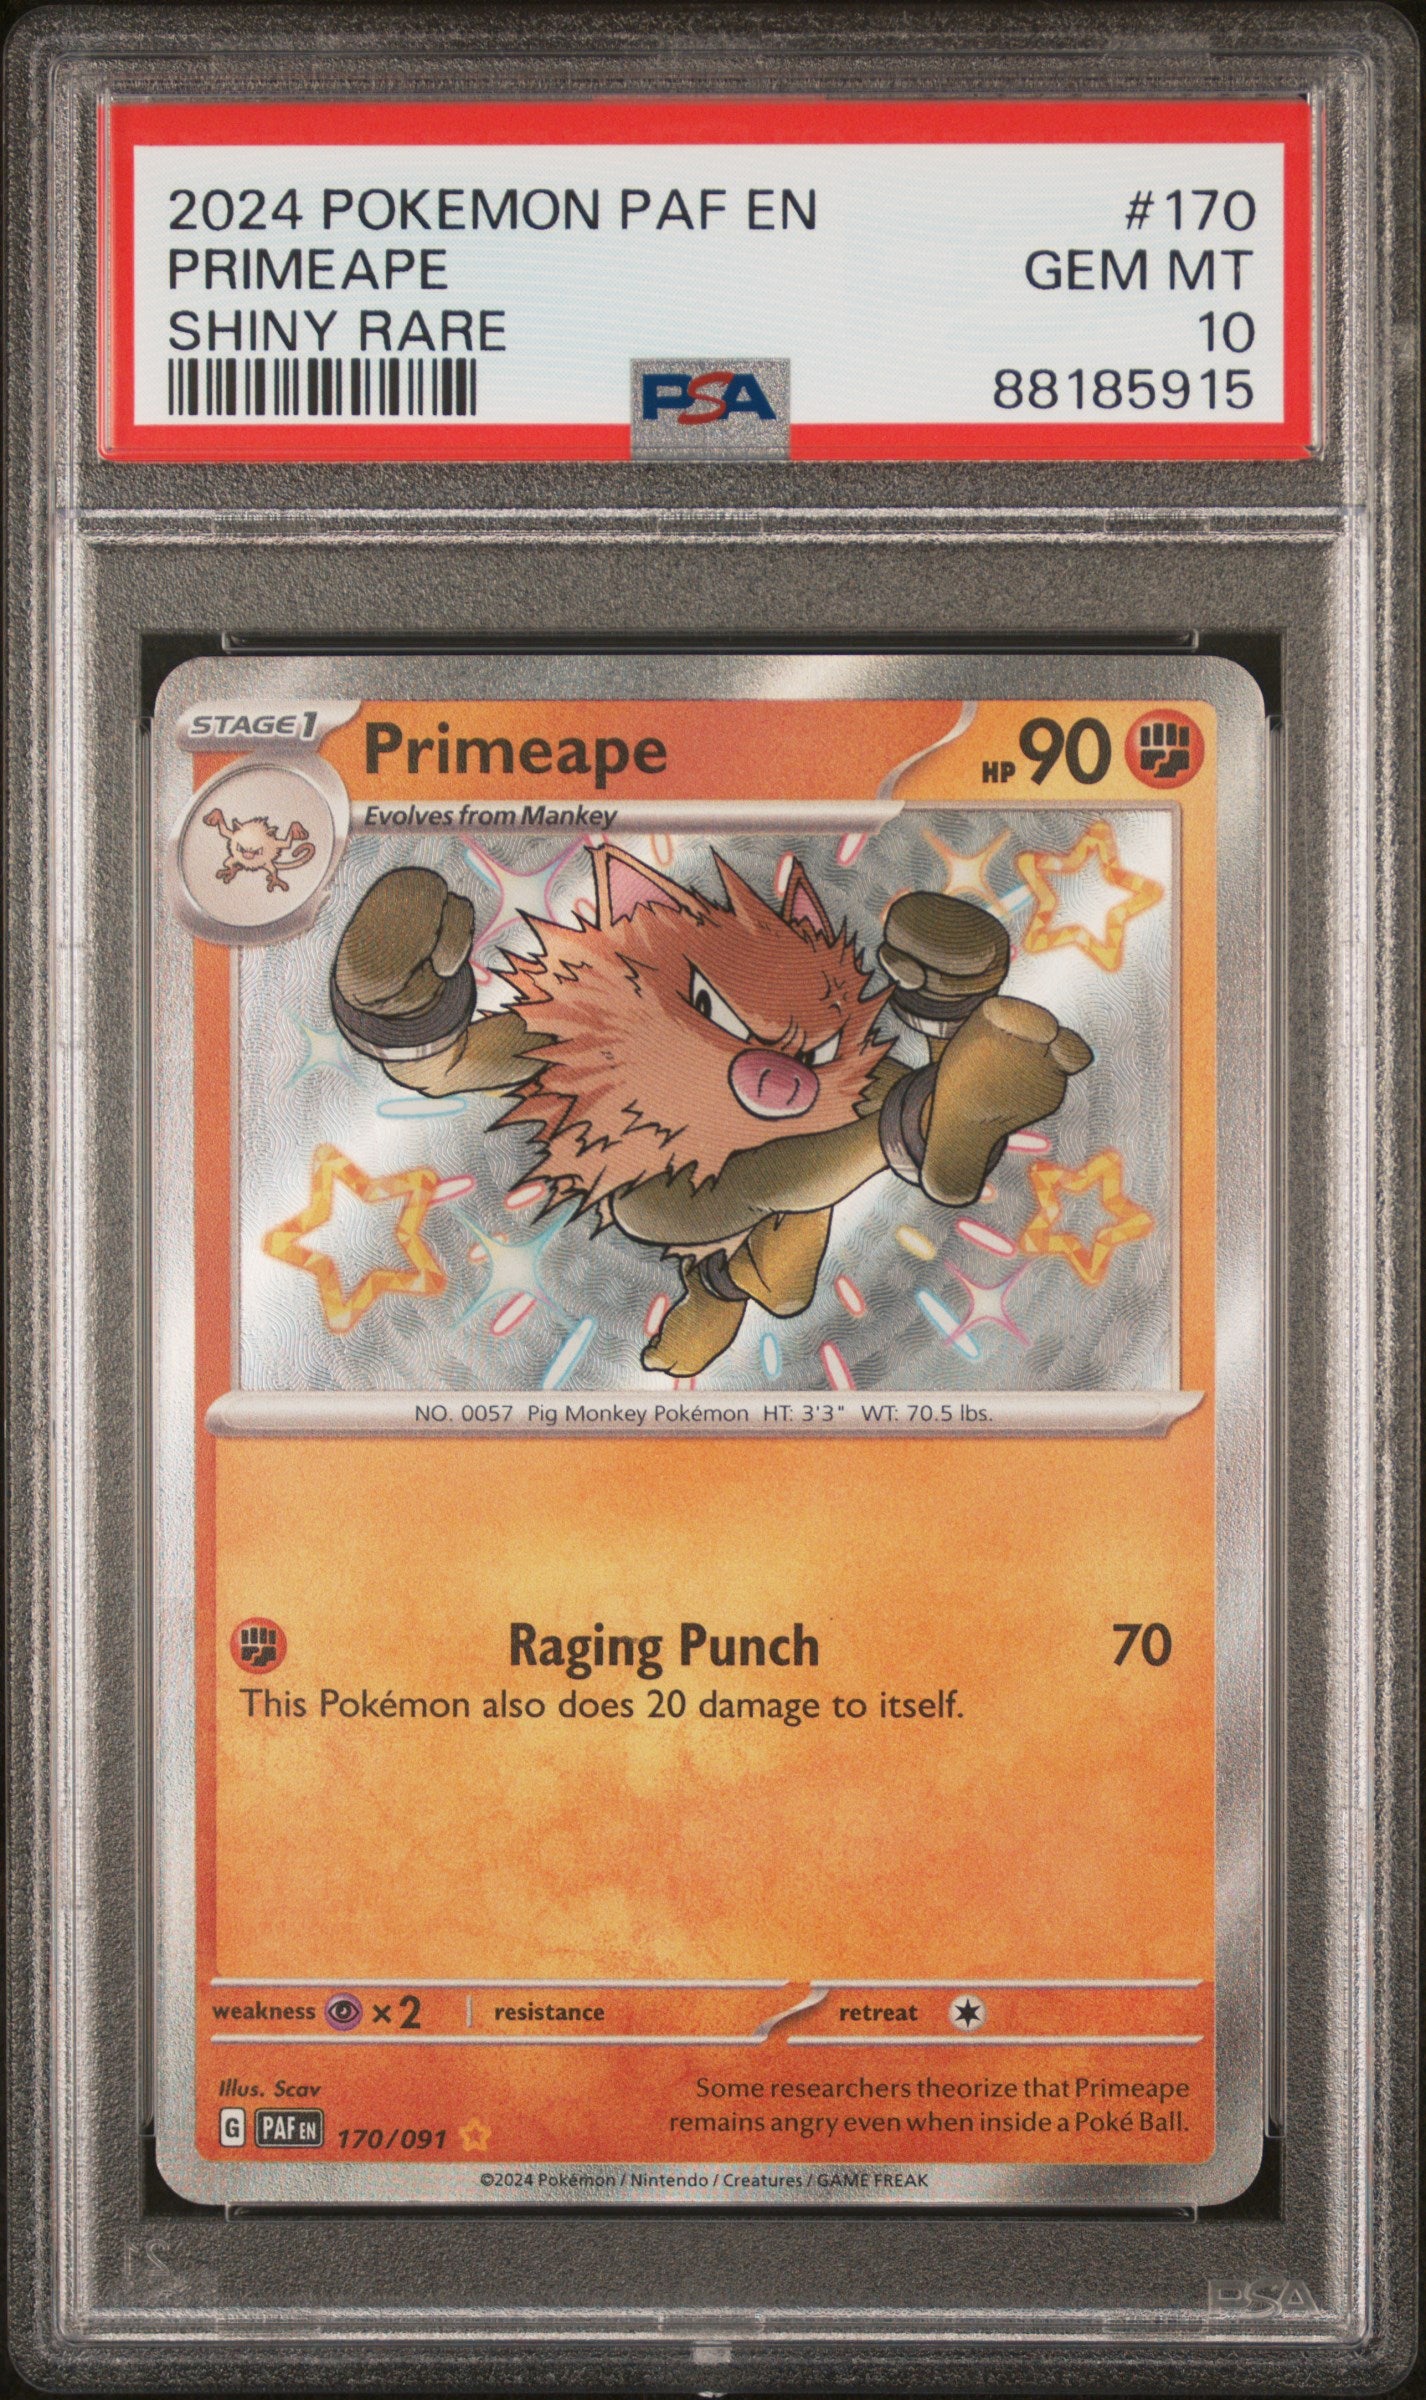 Pokémon - Primeape Paldean Fates 170/091 (Shiny Rare) - PSA 10 (GEM-MINT)